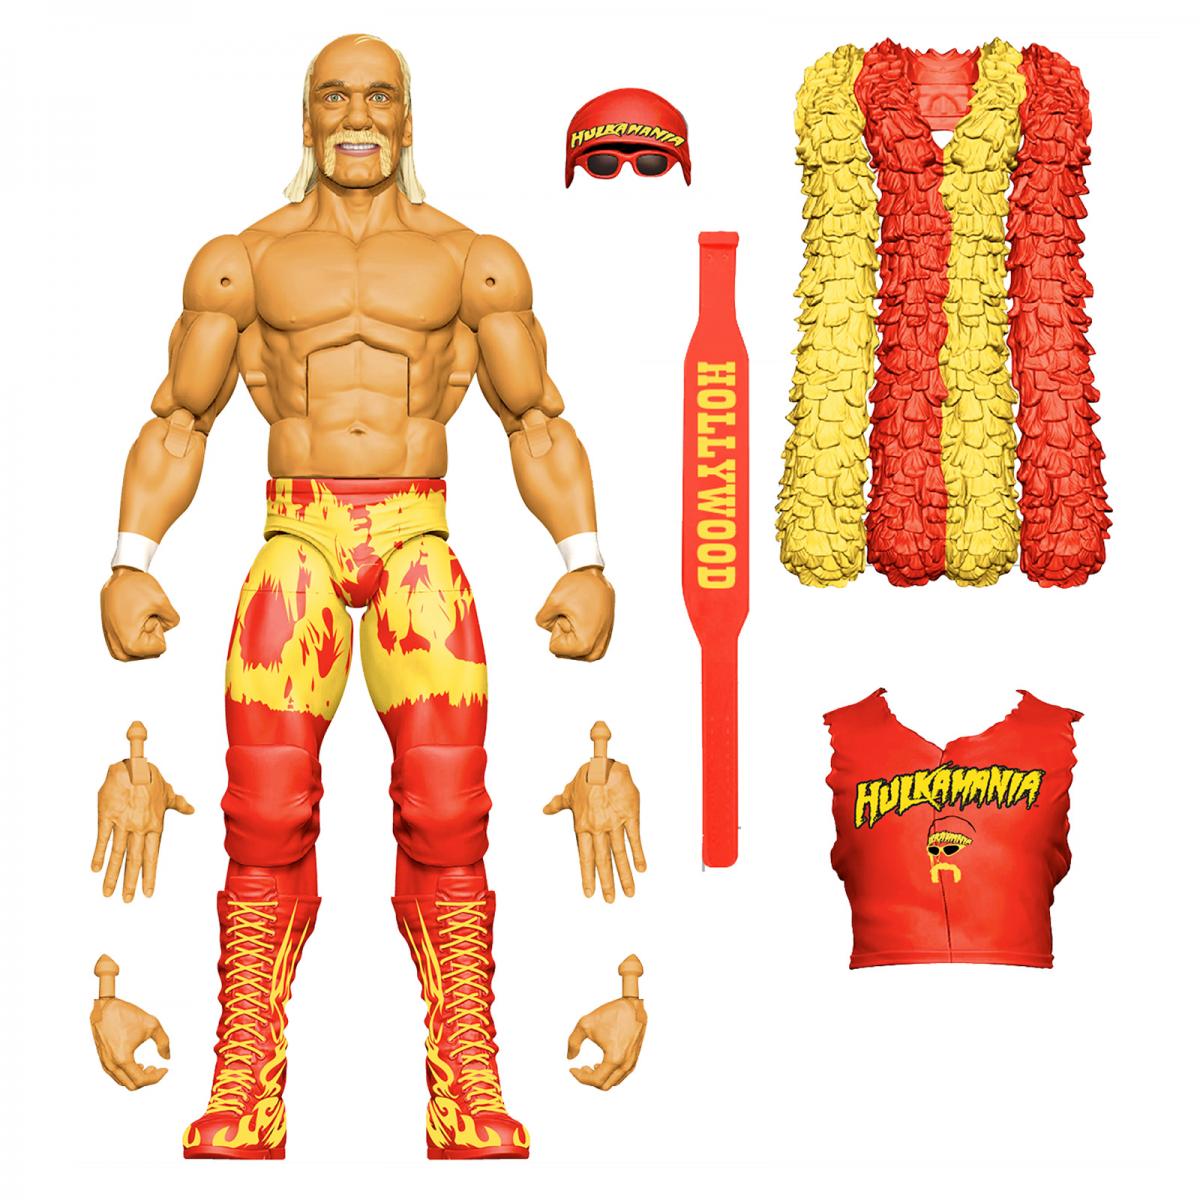 Elite 91 Hulk Hogan Previously Revealed 5af638313a484076b011fc8d79d68704